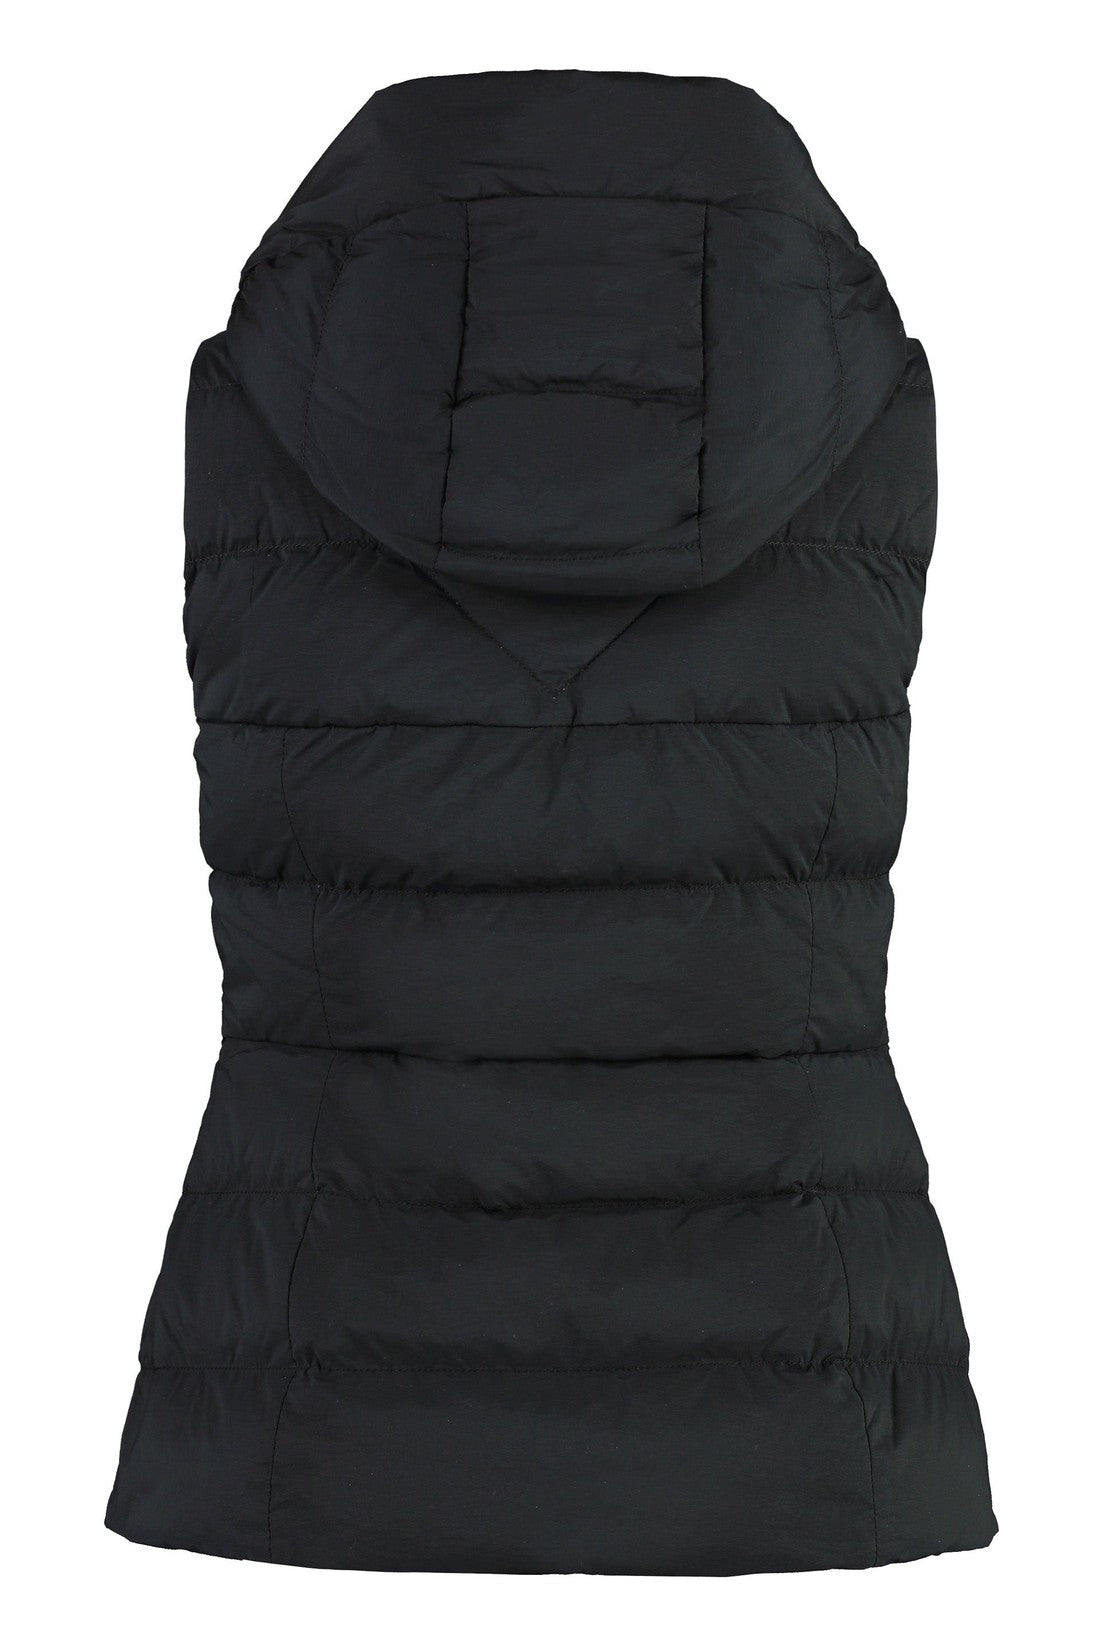 Canada Goose Black-OUTLET-SALE-Clair bodywarmer jacket-ARCHIVIST